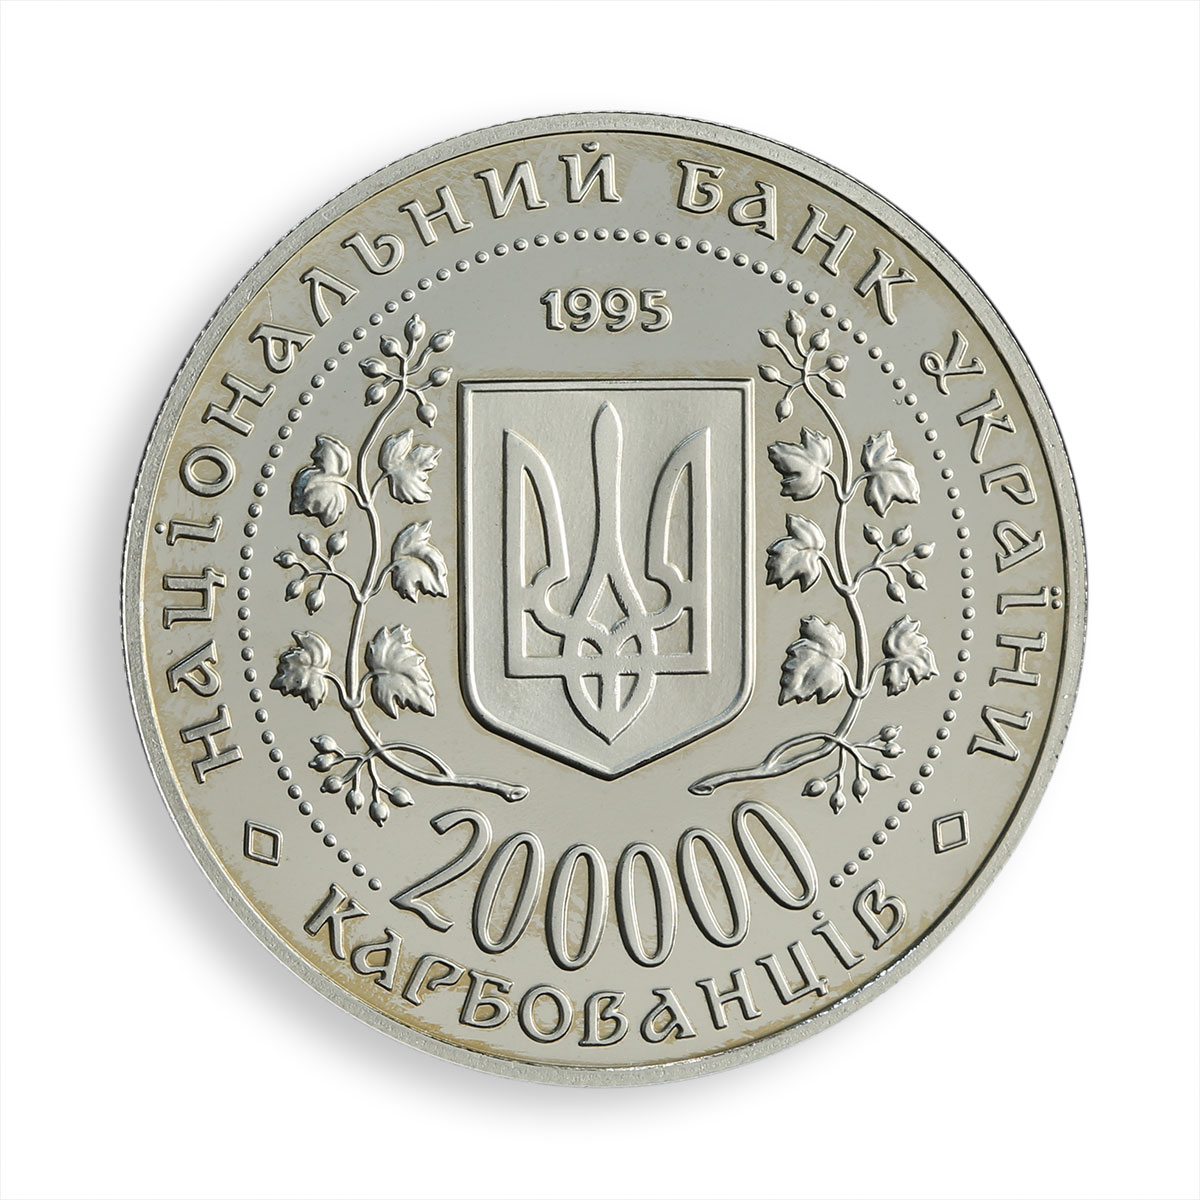 Ukraine 200000 karbovanets Sevastopol Victory WWII nickel coin 1995